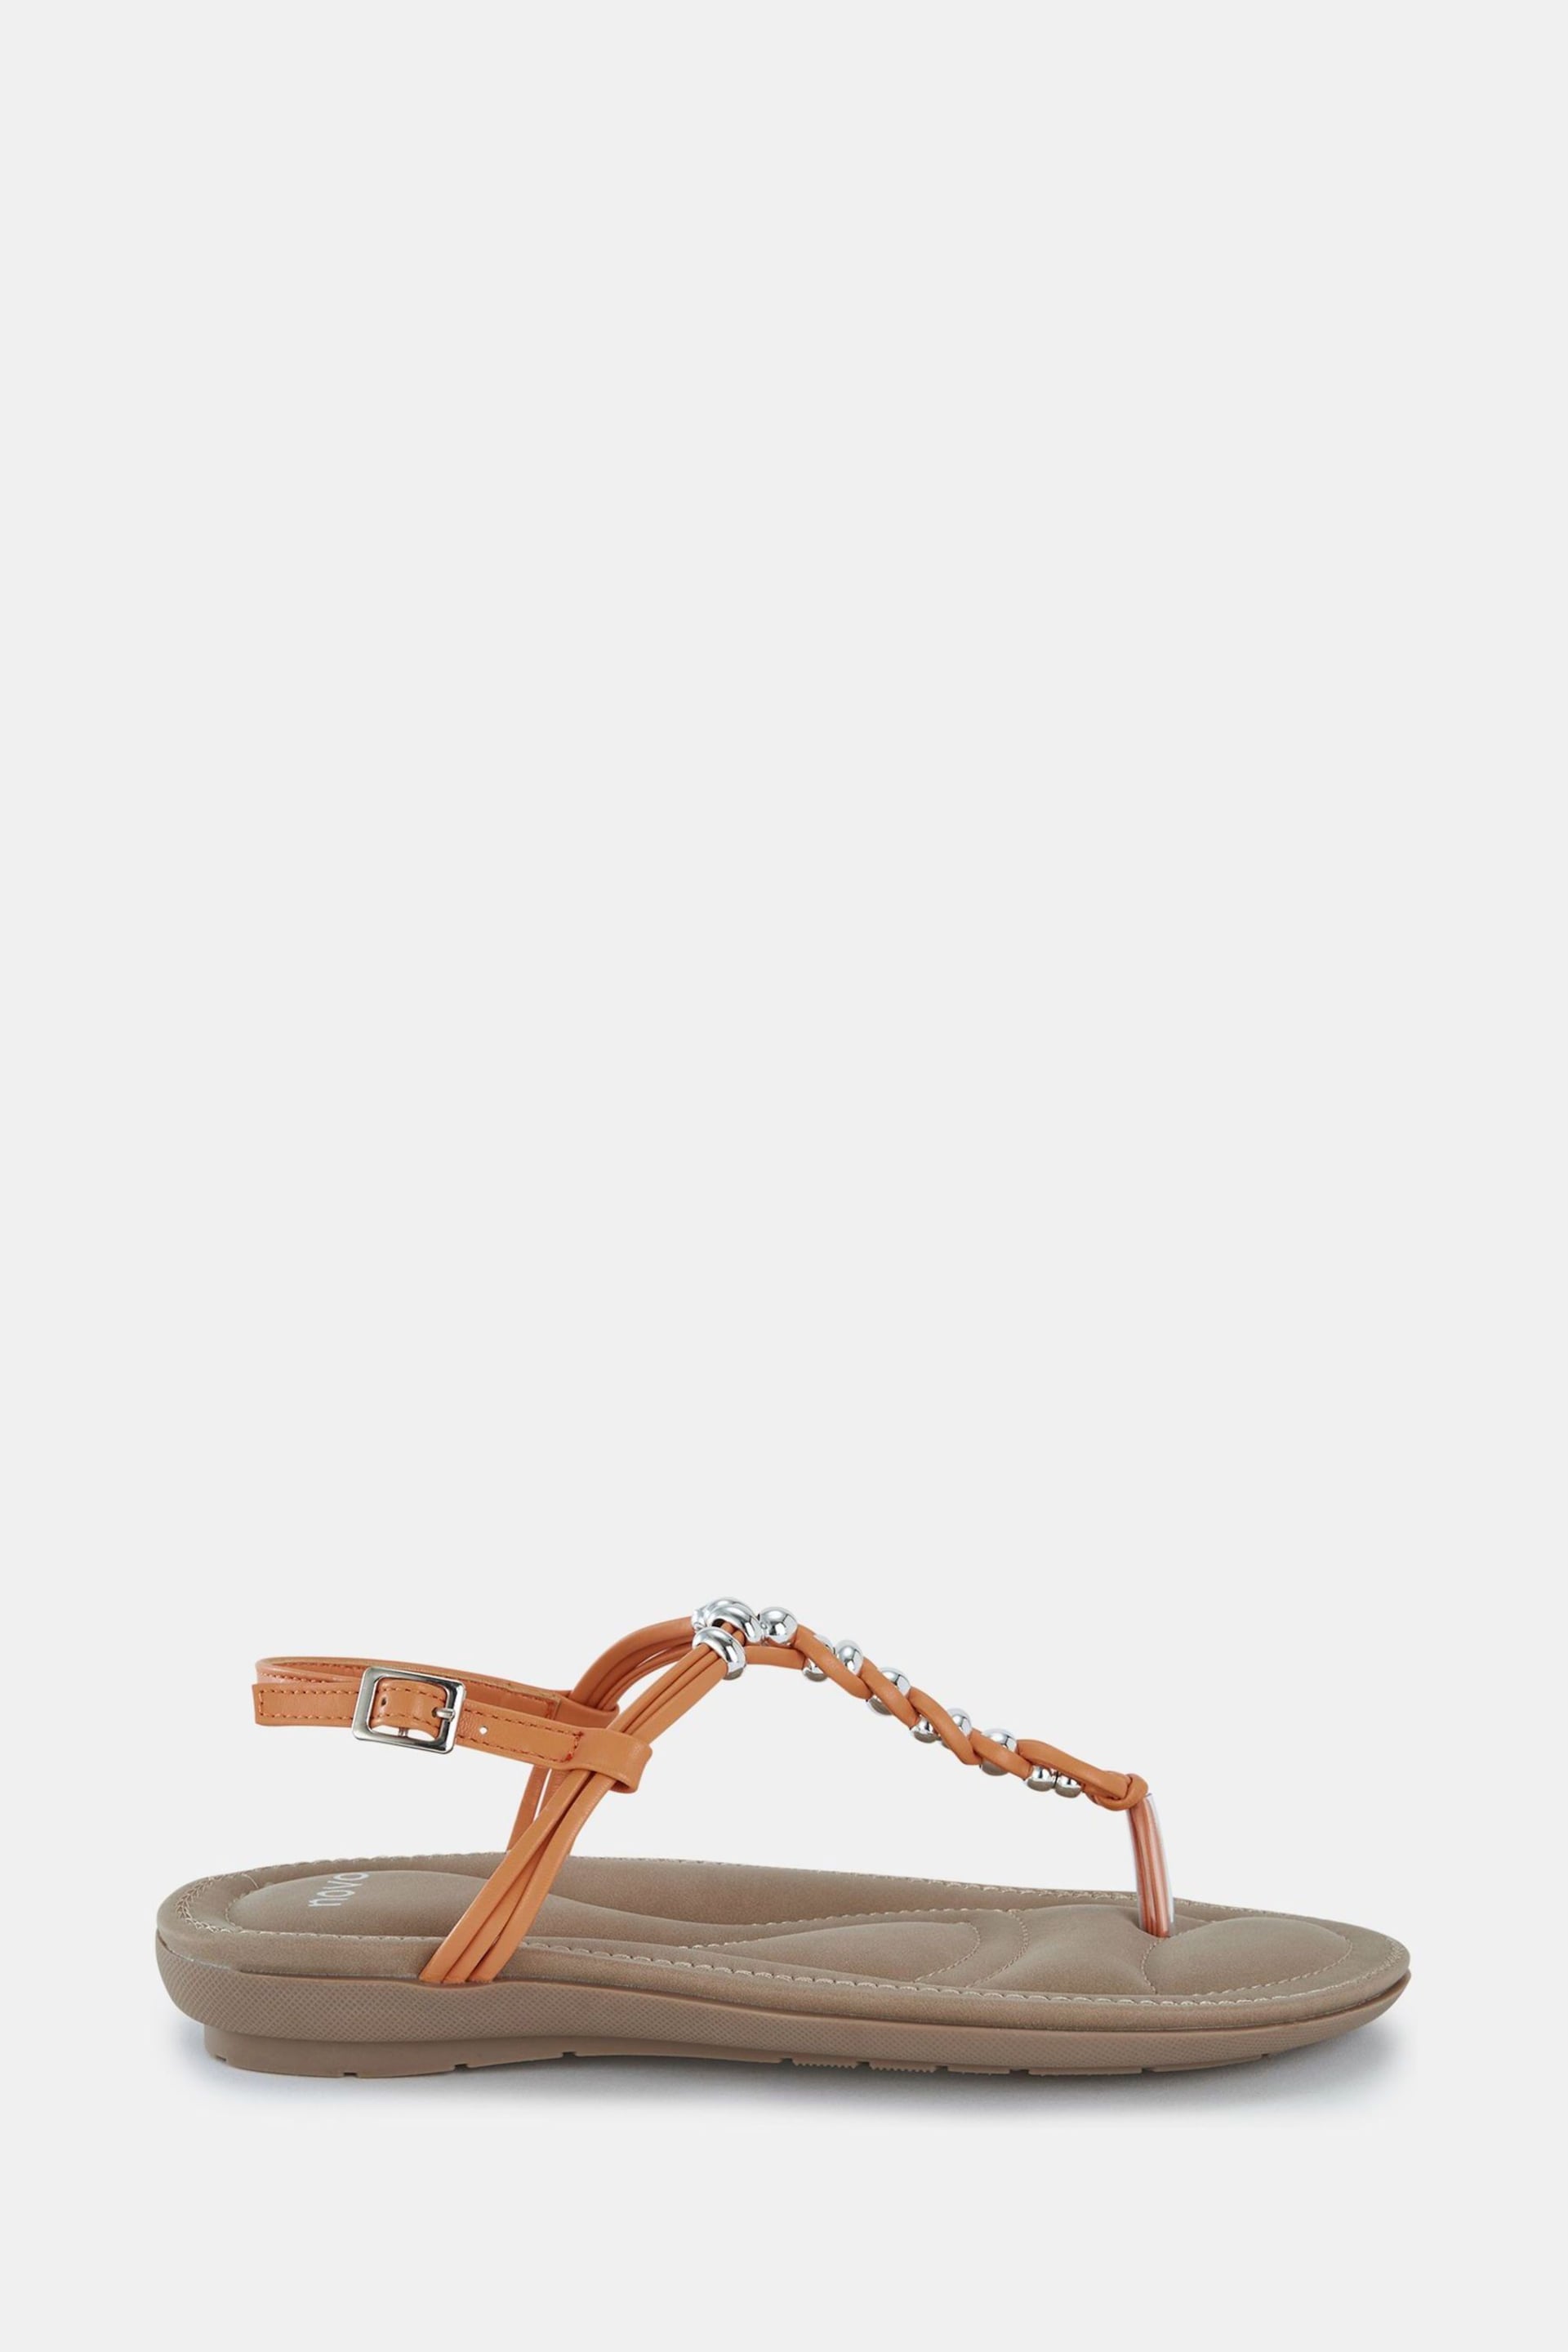 Novo Orange Tara Toe Post Bead Sandals - Image 2 of 6